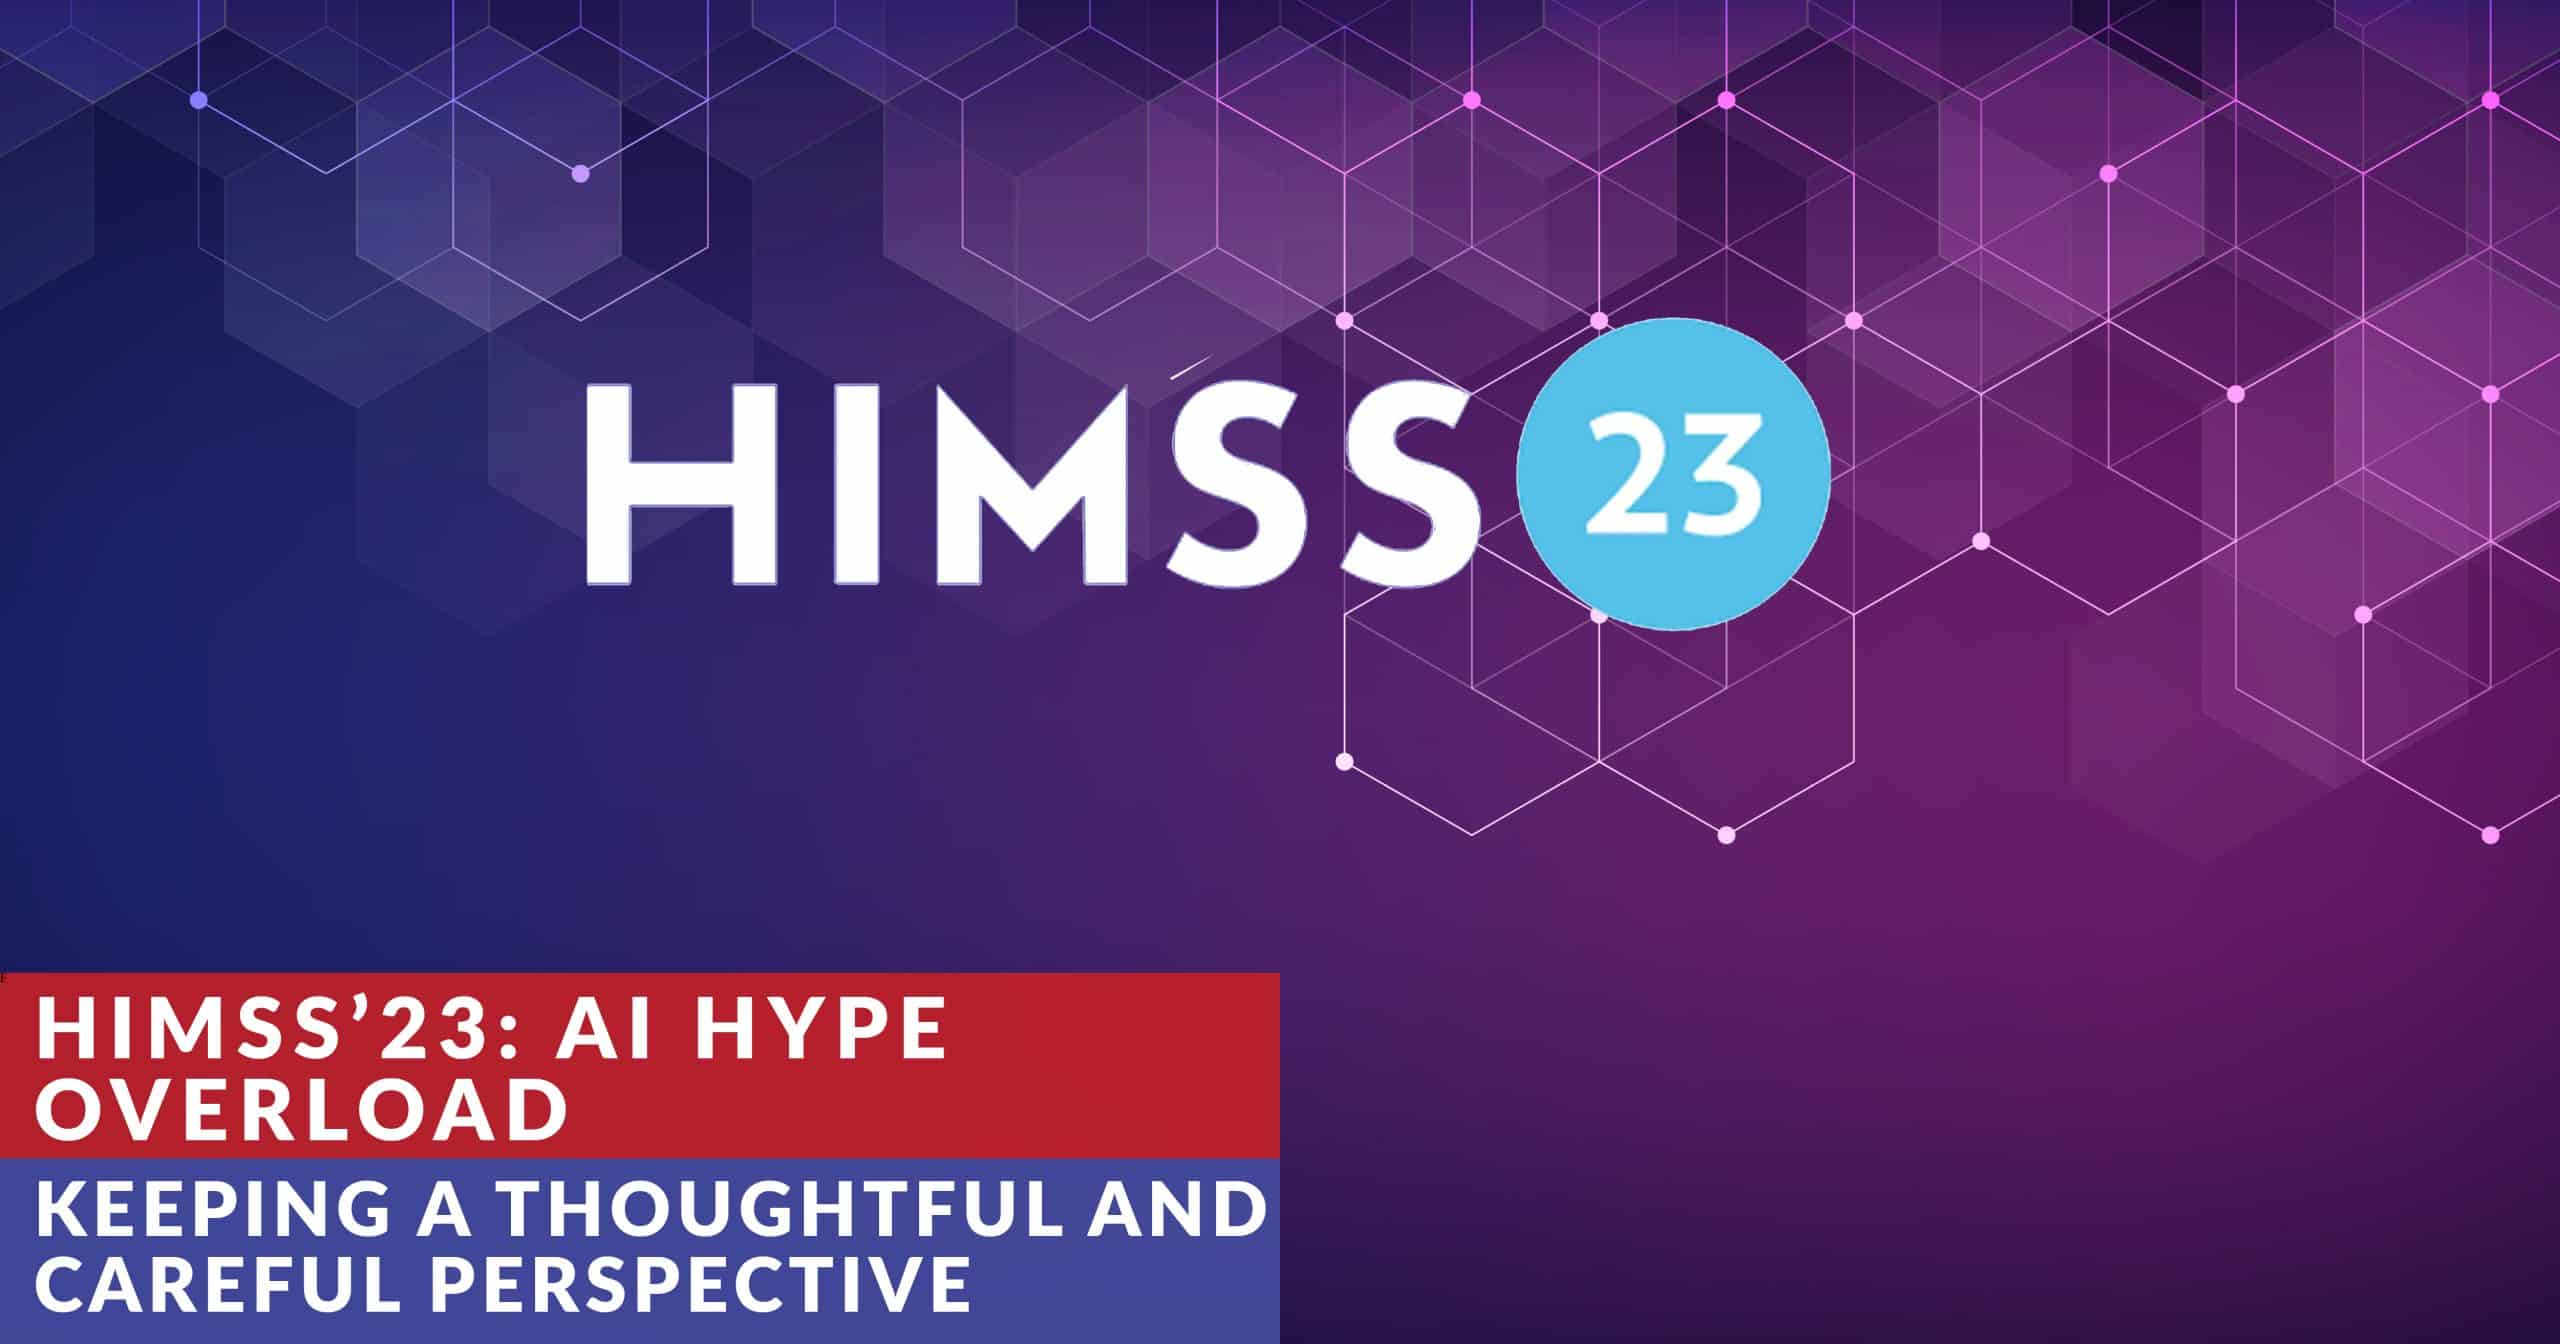 HIMSS’23: AI Hype Overload